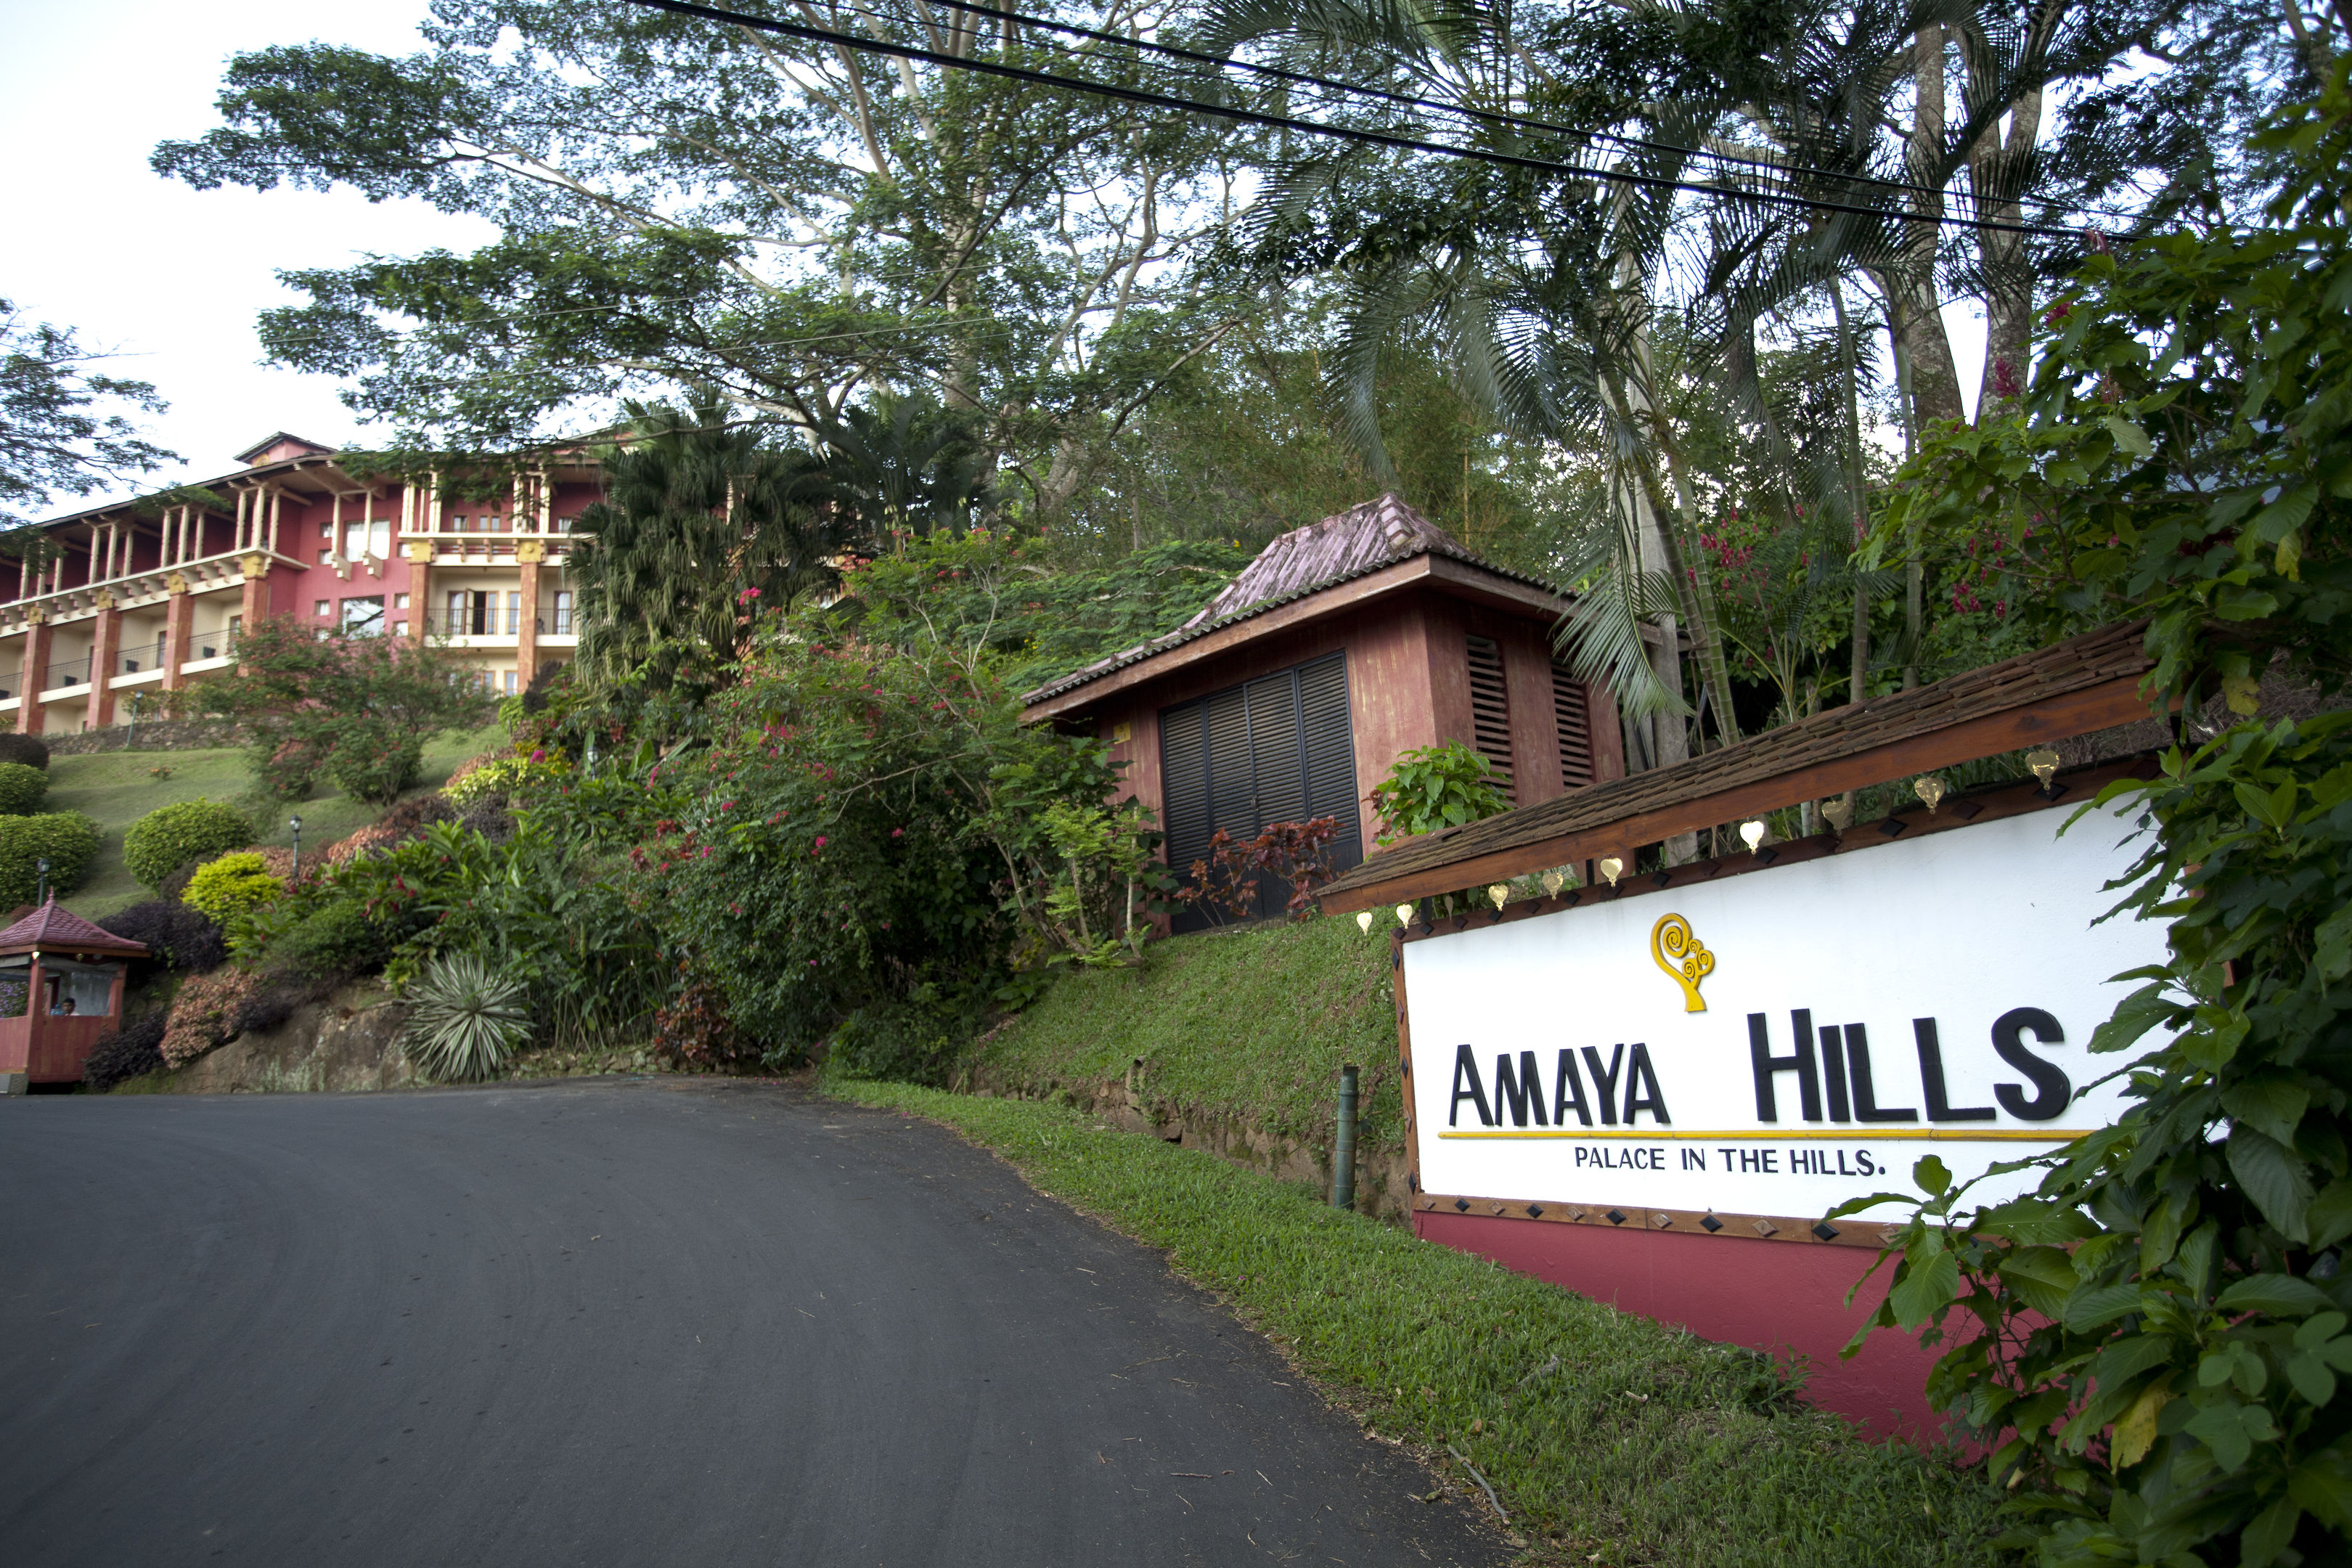 Amaya Hills